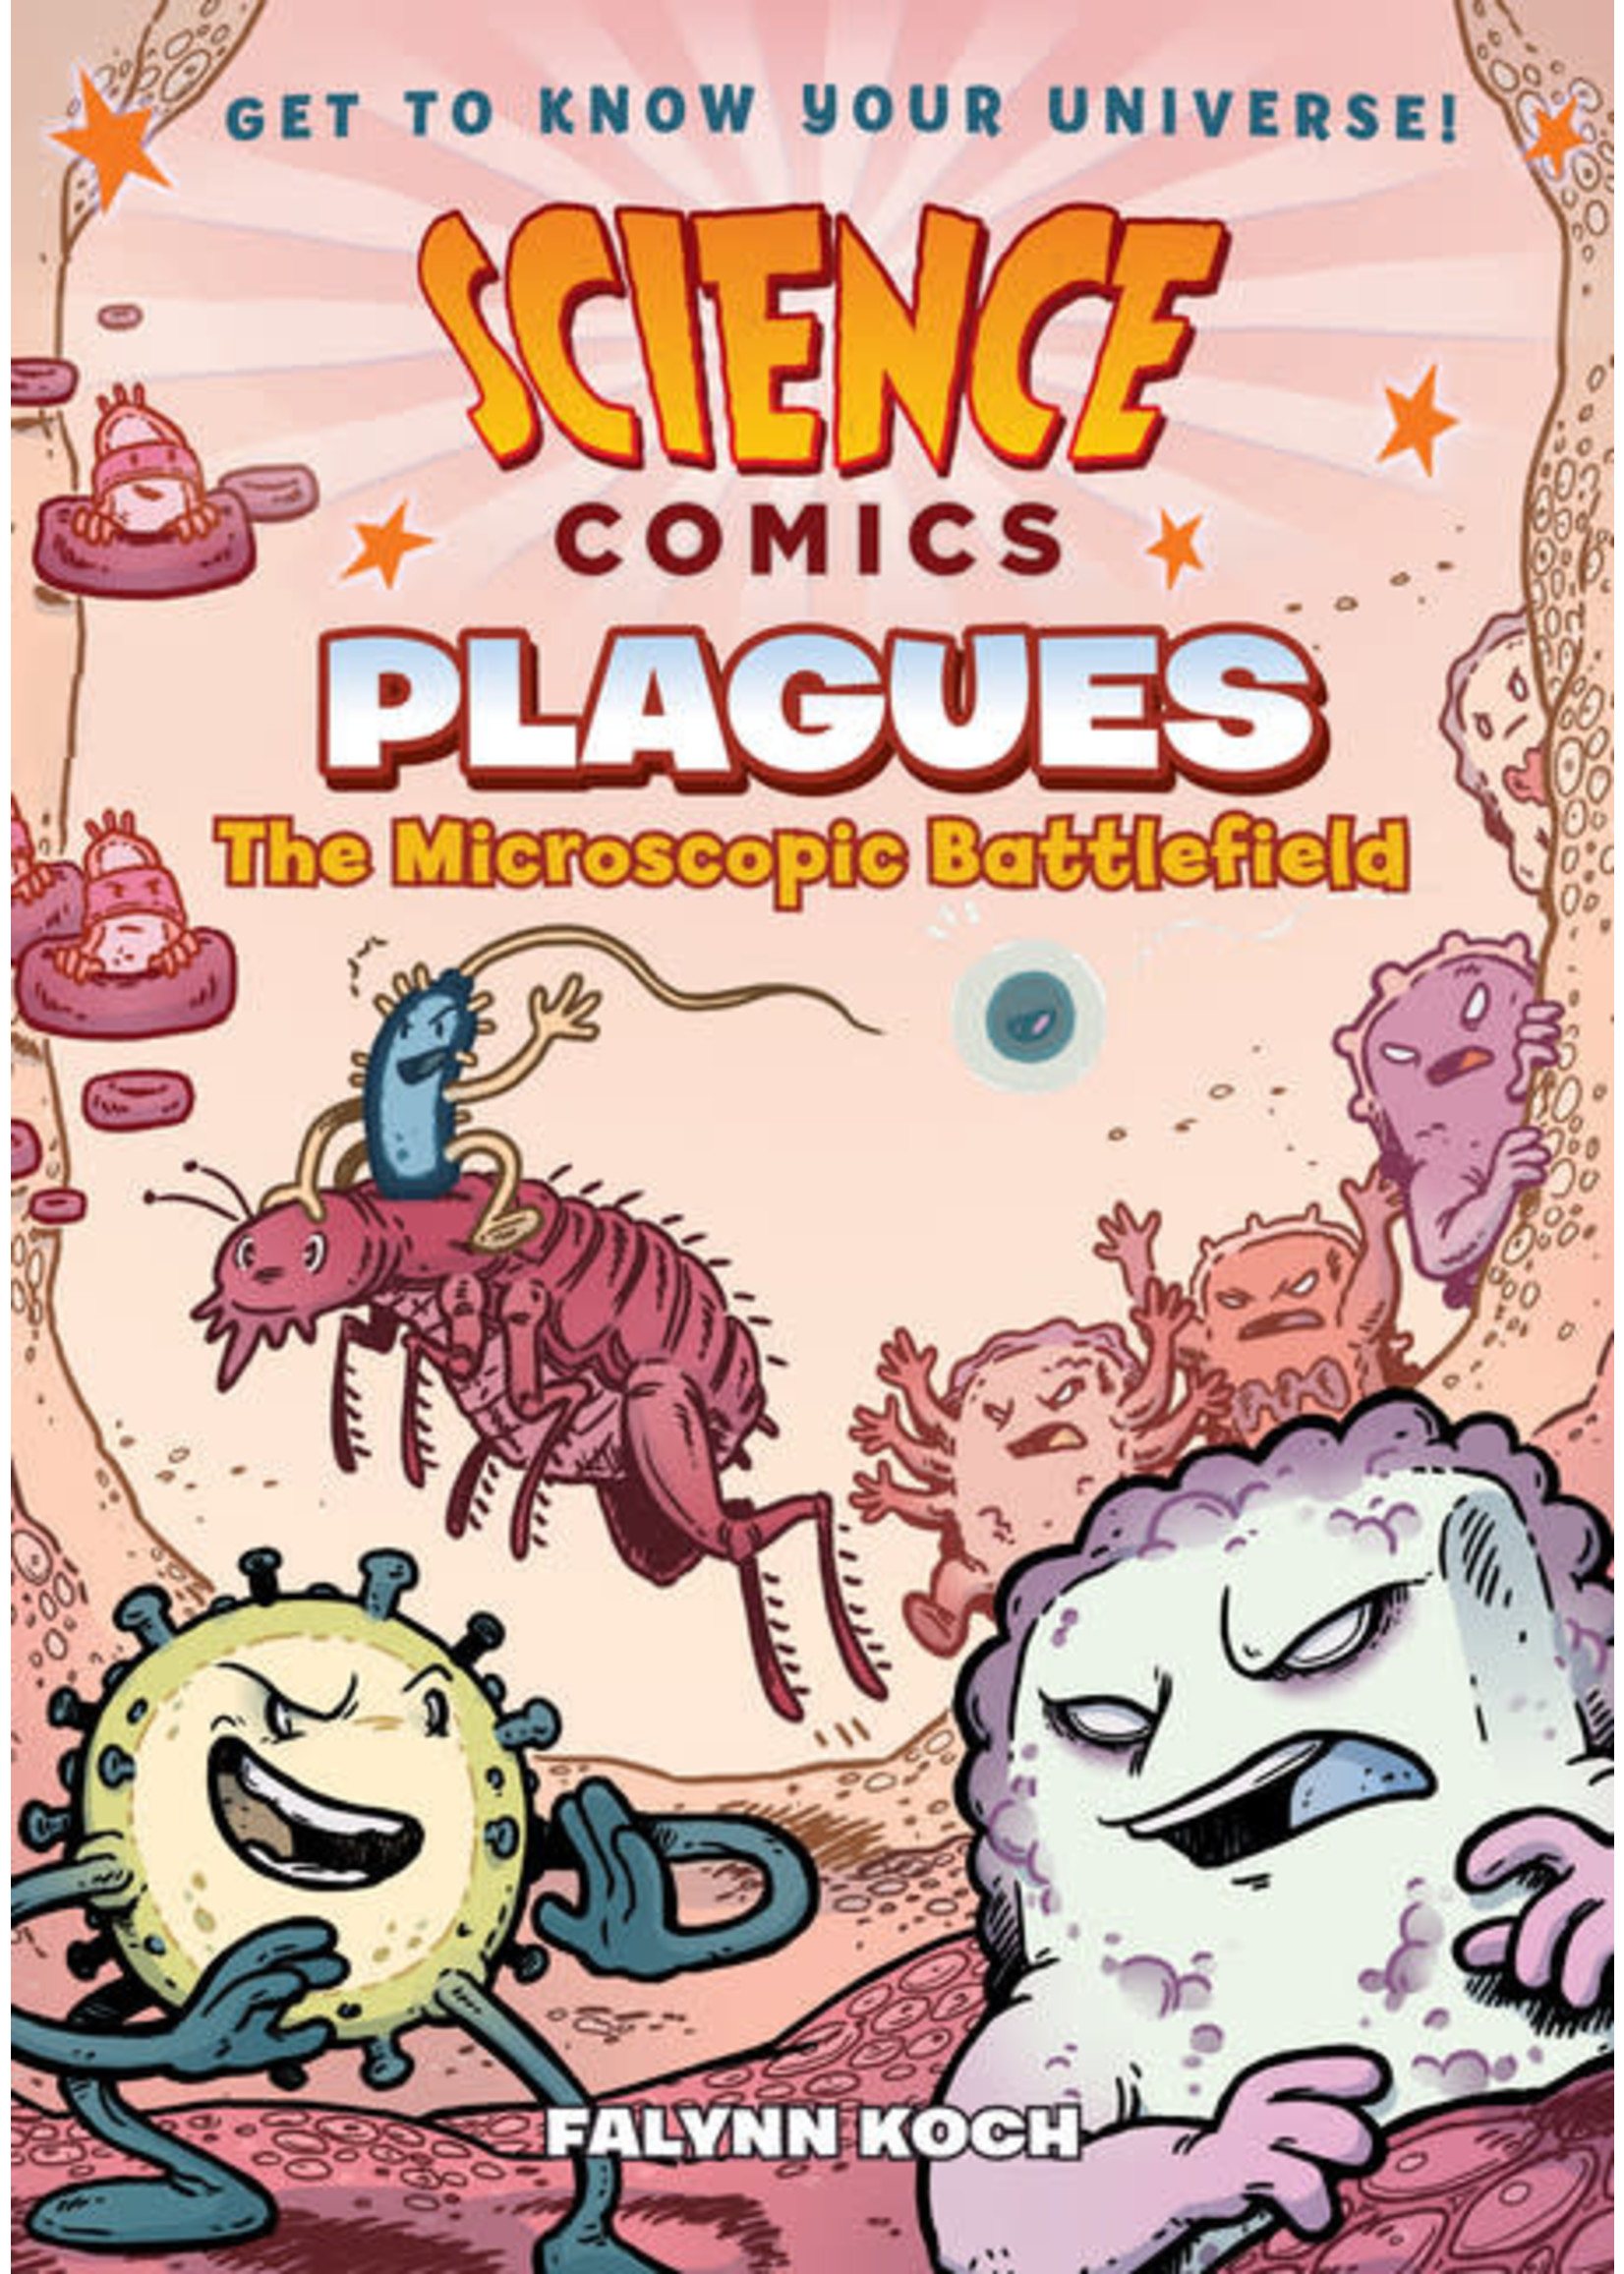 Science Comics: Plagues - The Microscopic Battlefield by Falynn Koch